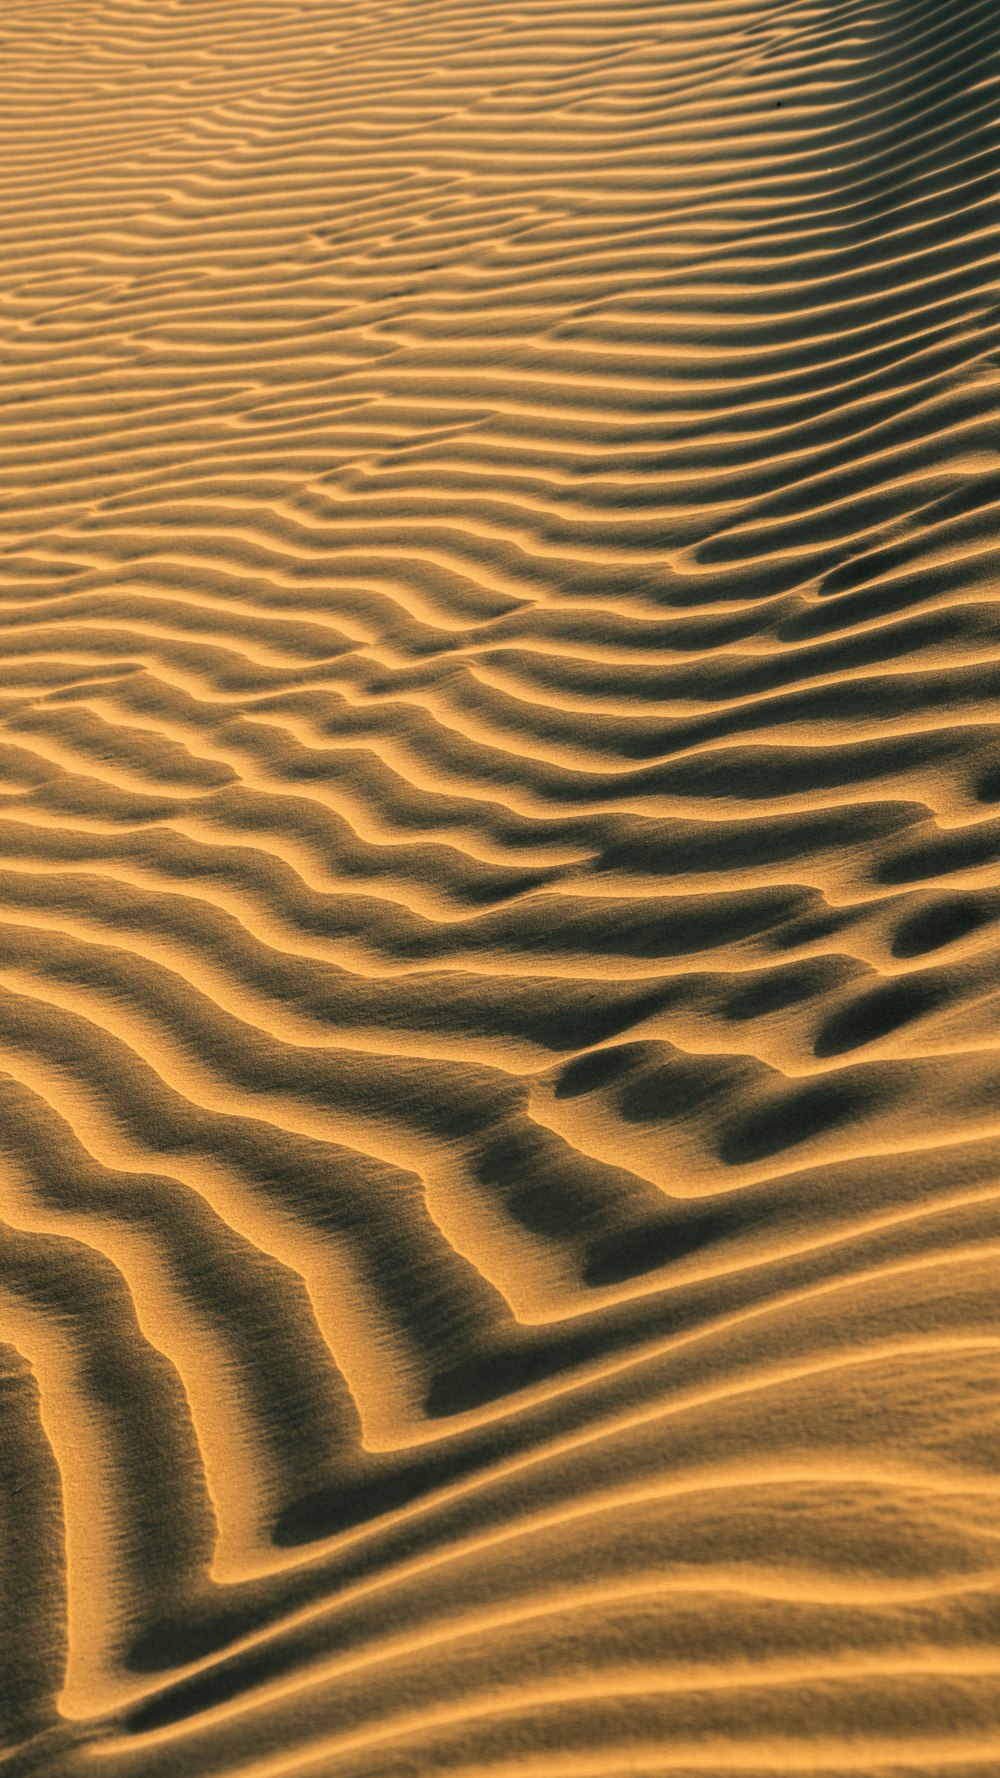 brown sand dunes during daytime